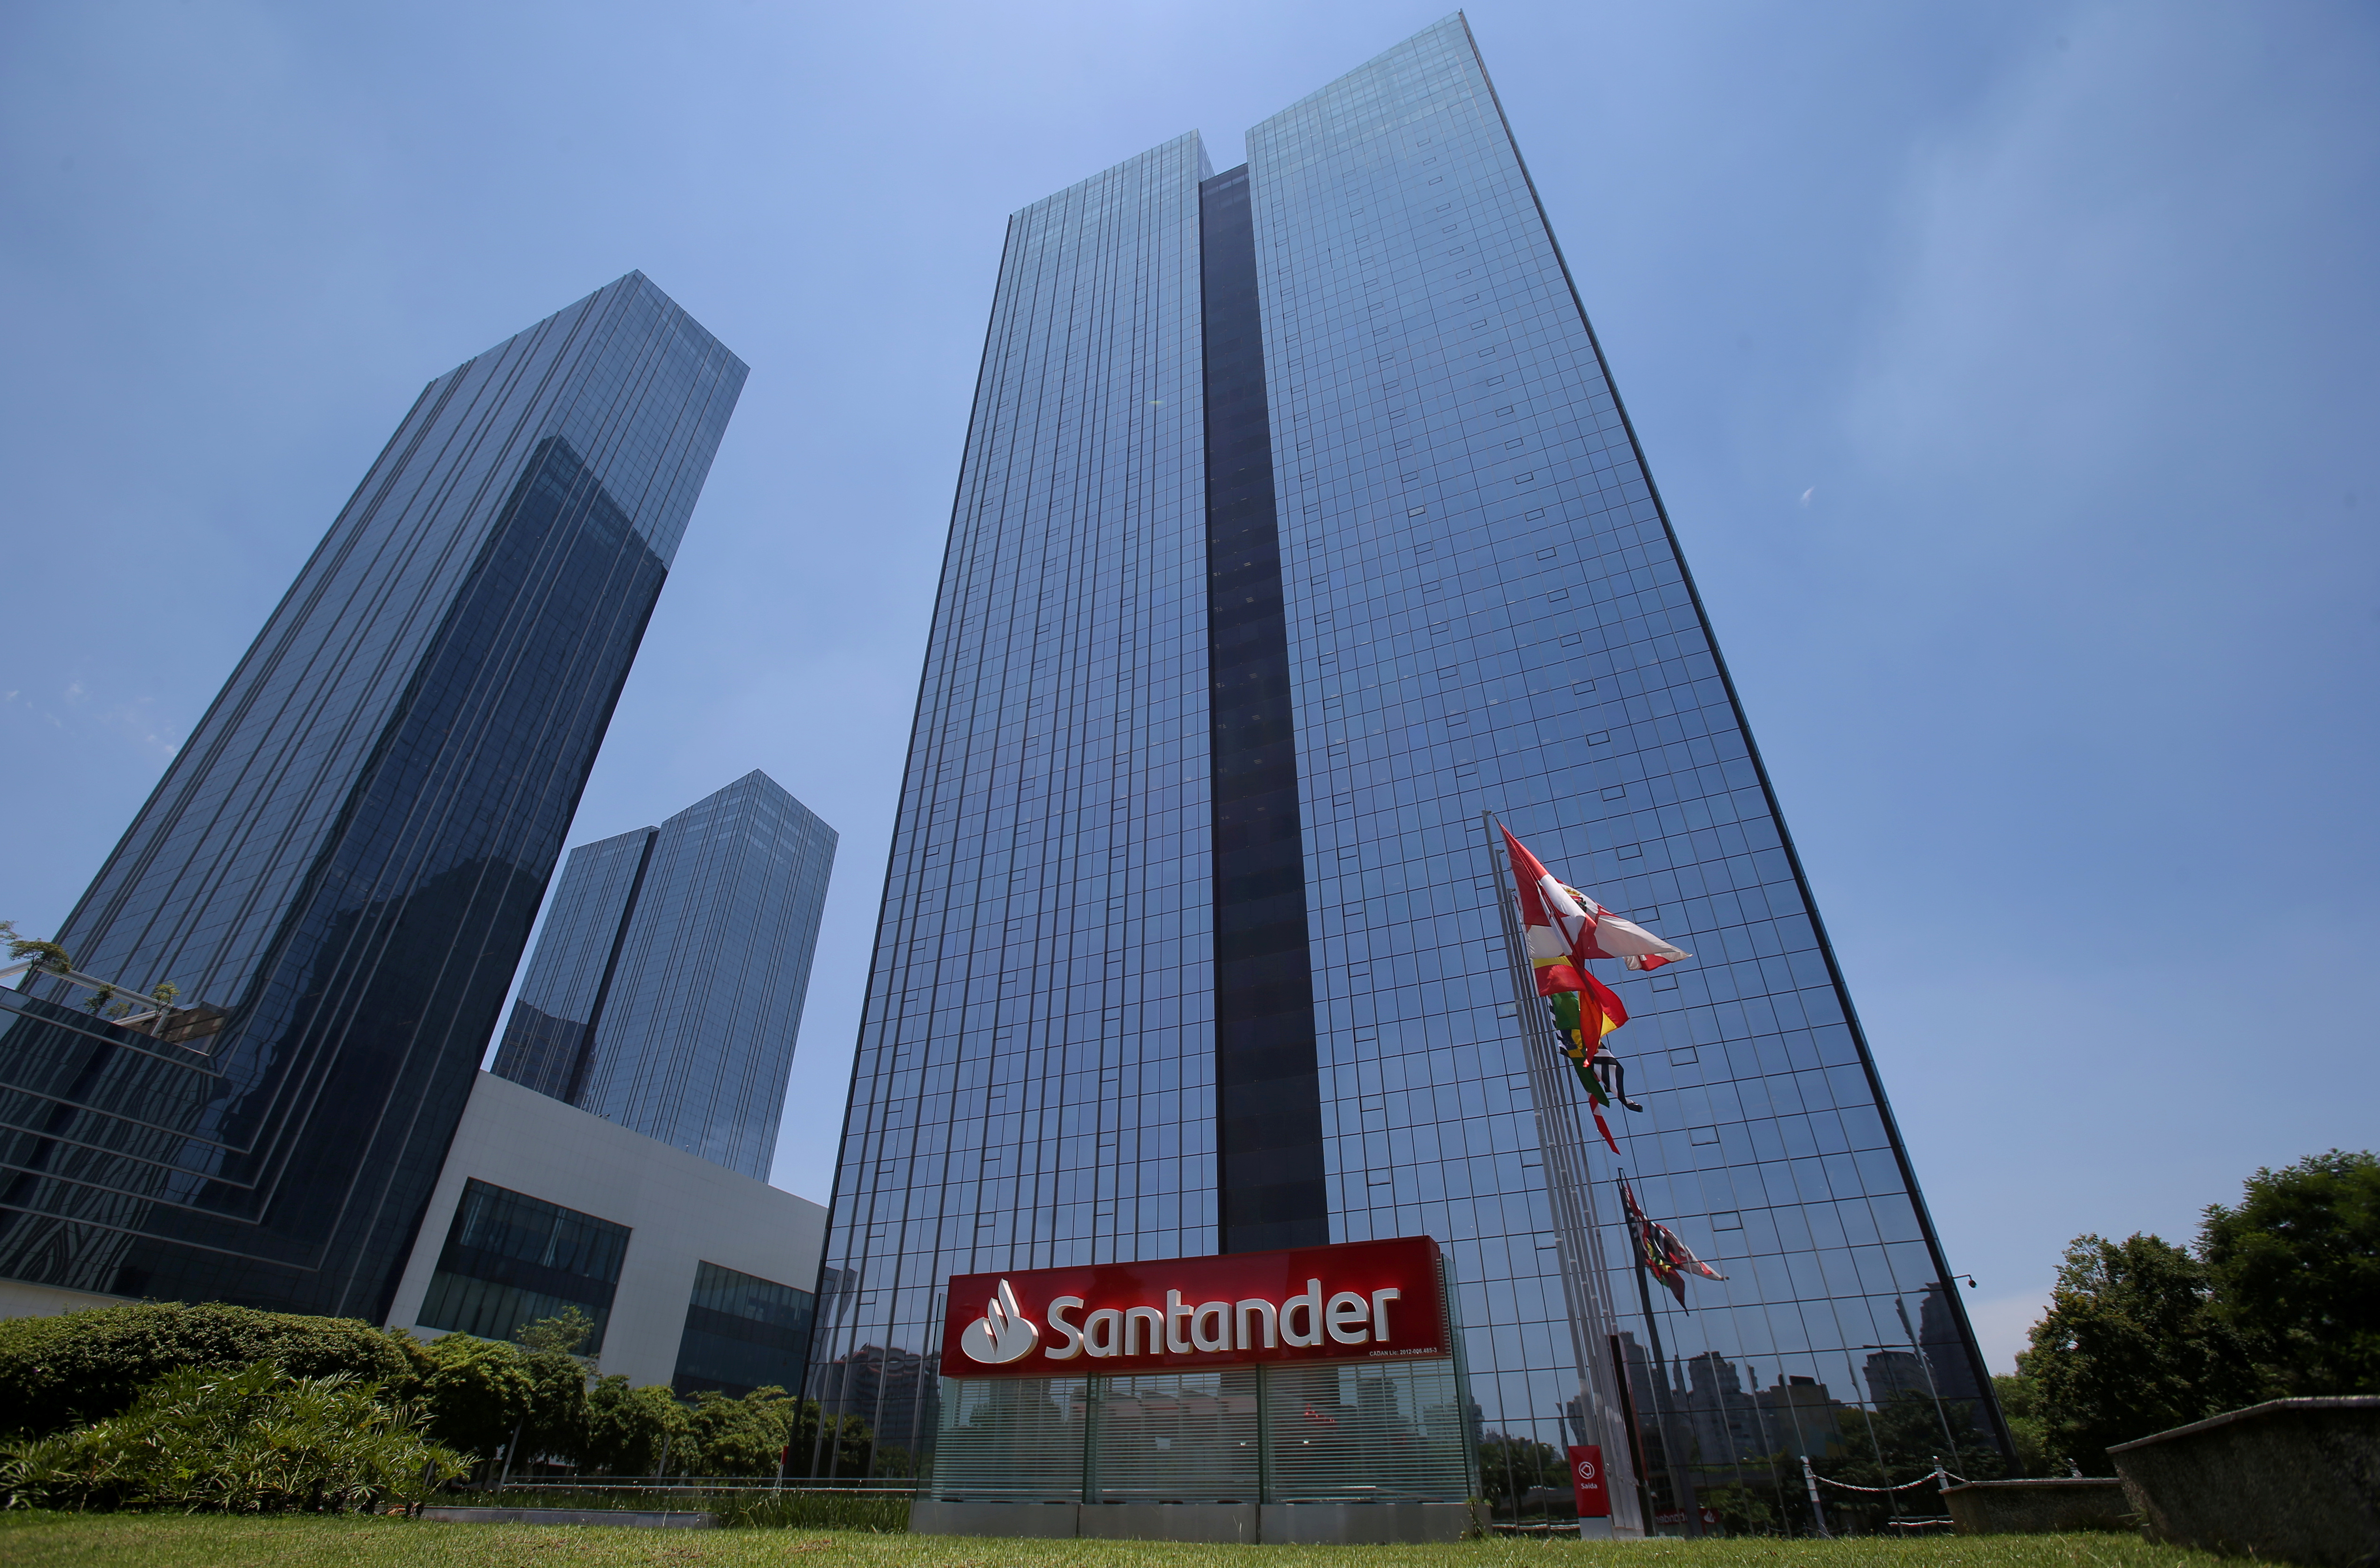 Santander bank office building is seen in Sao Paulo